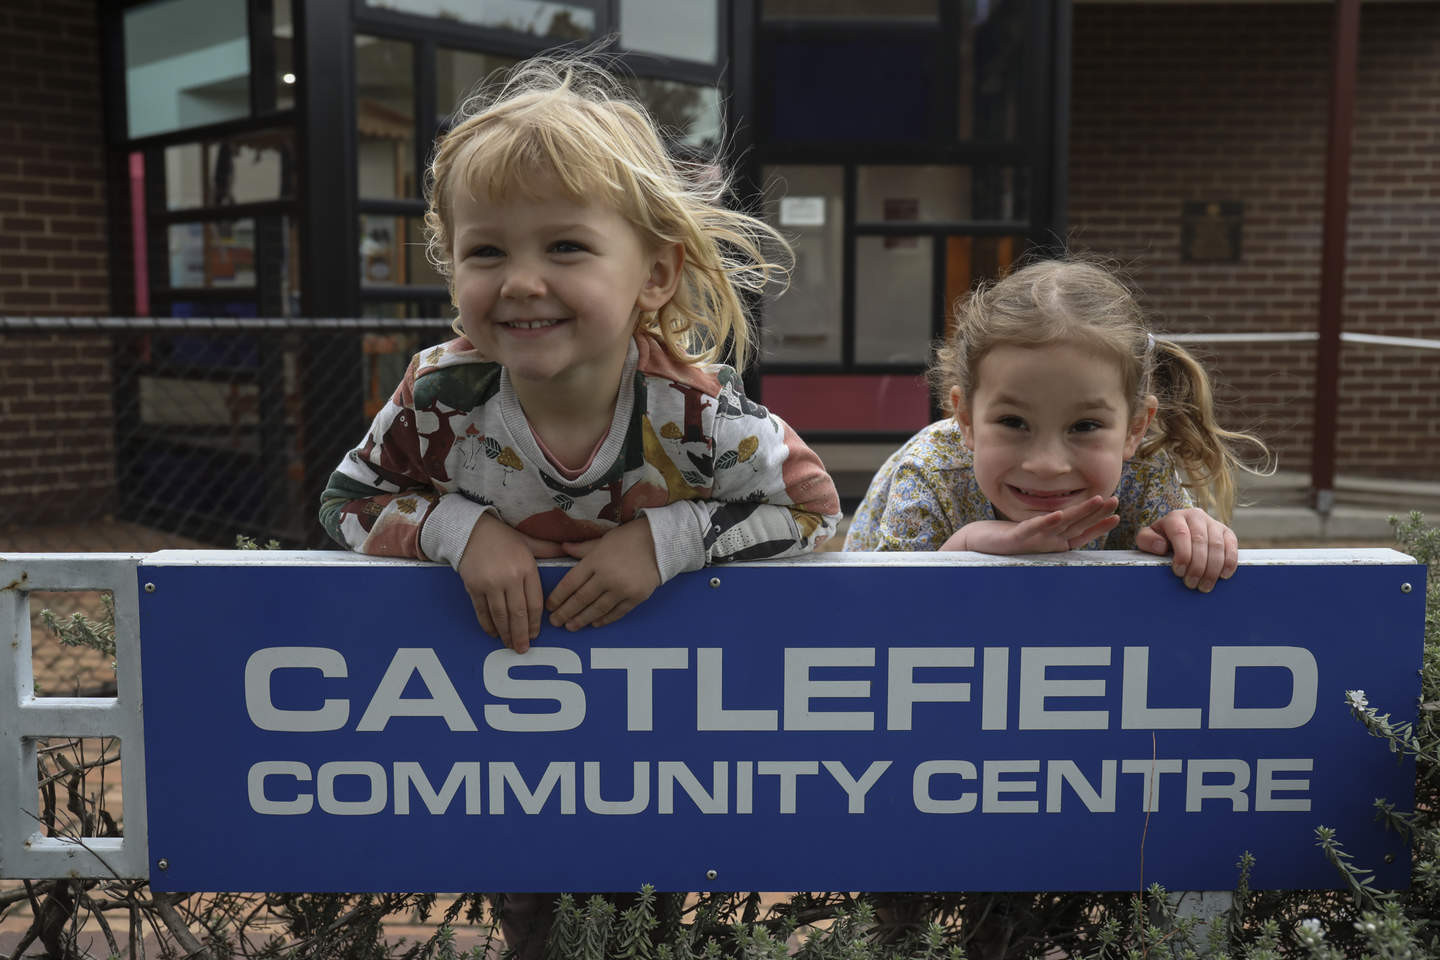 Castlefield Community Centre